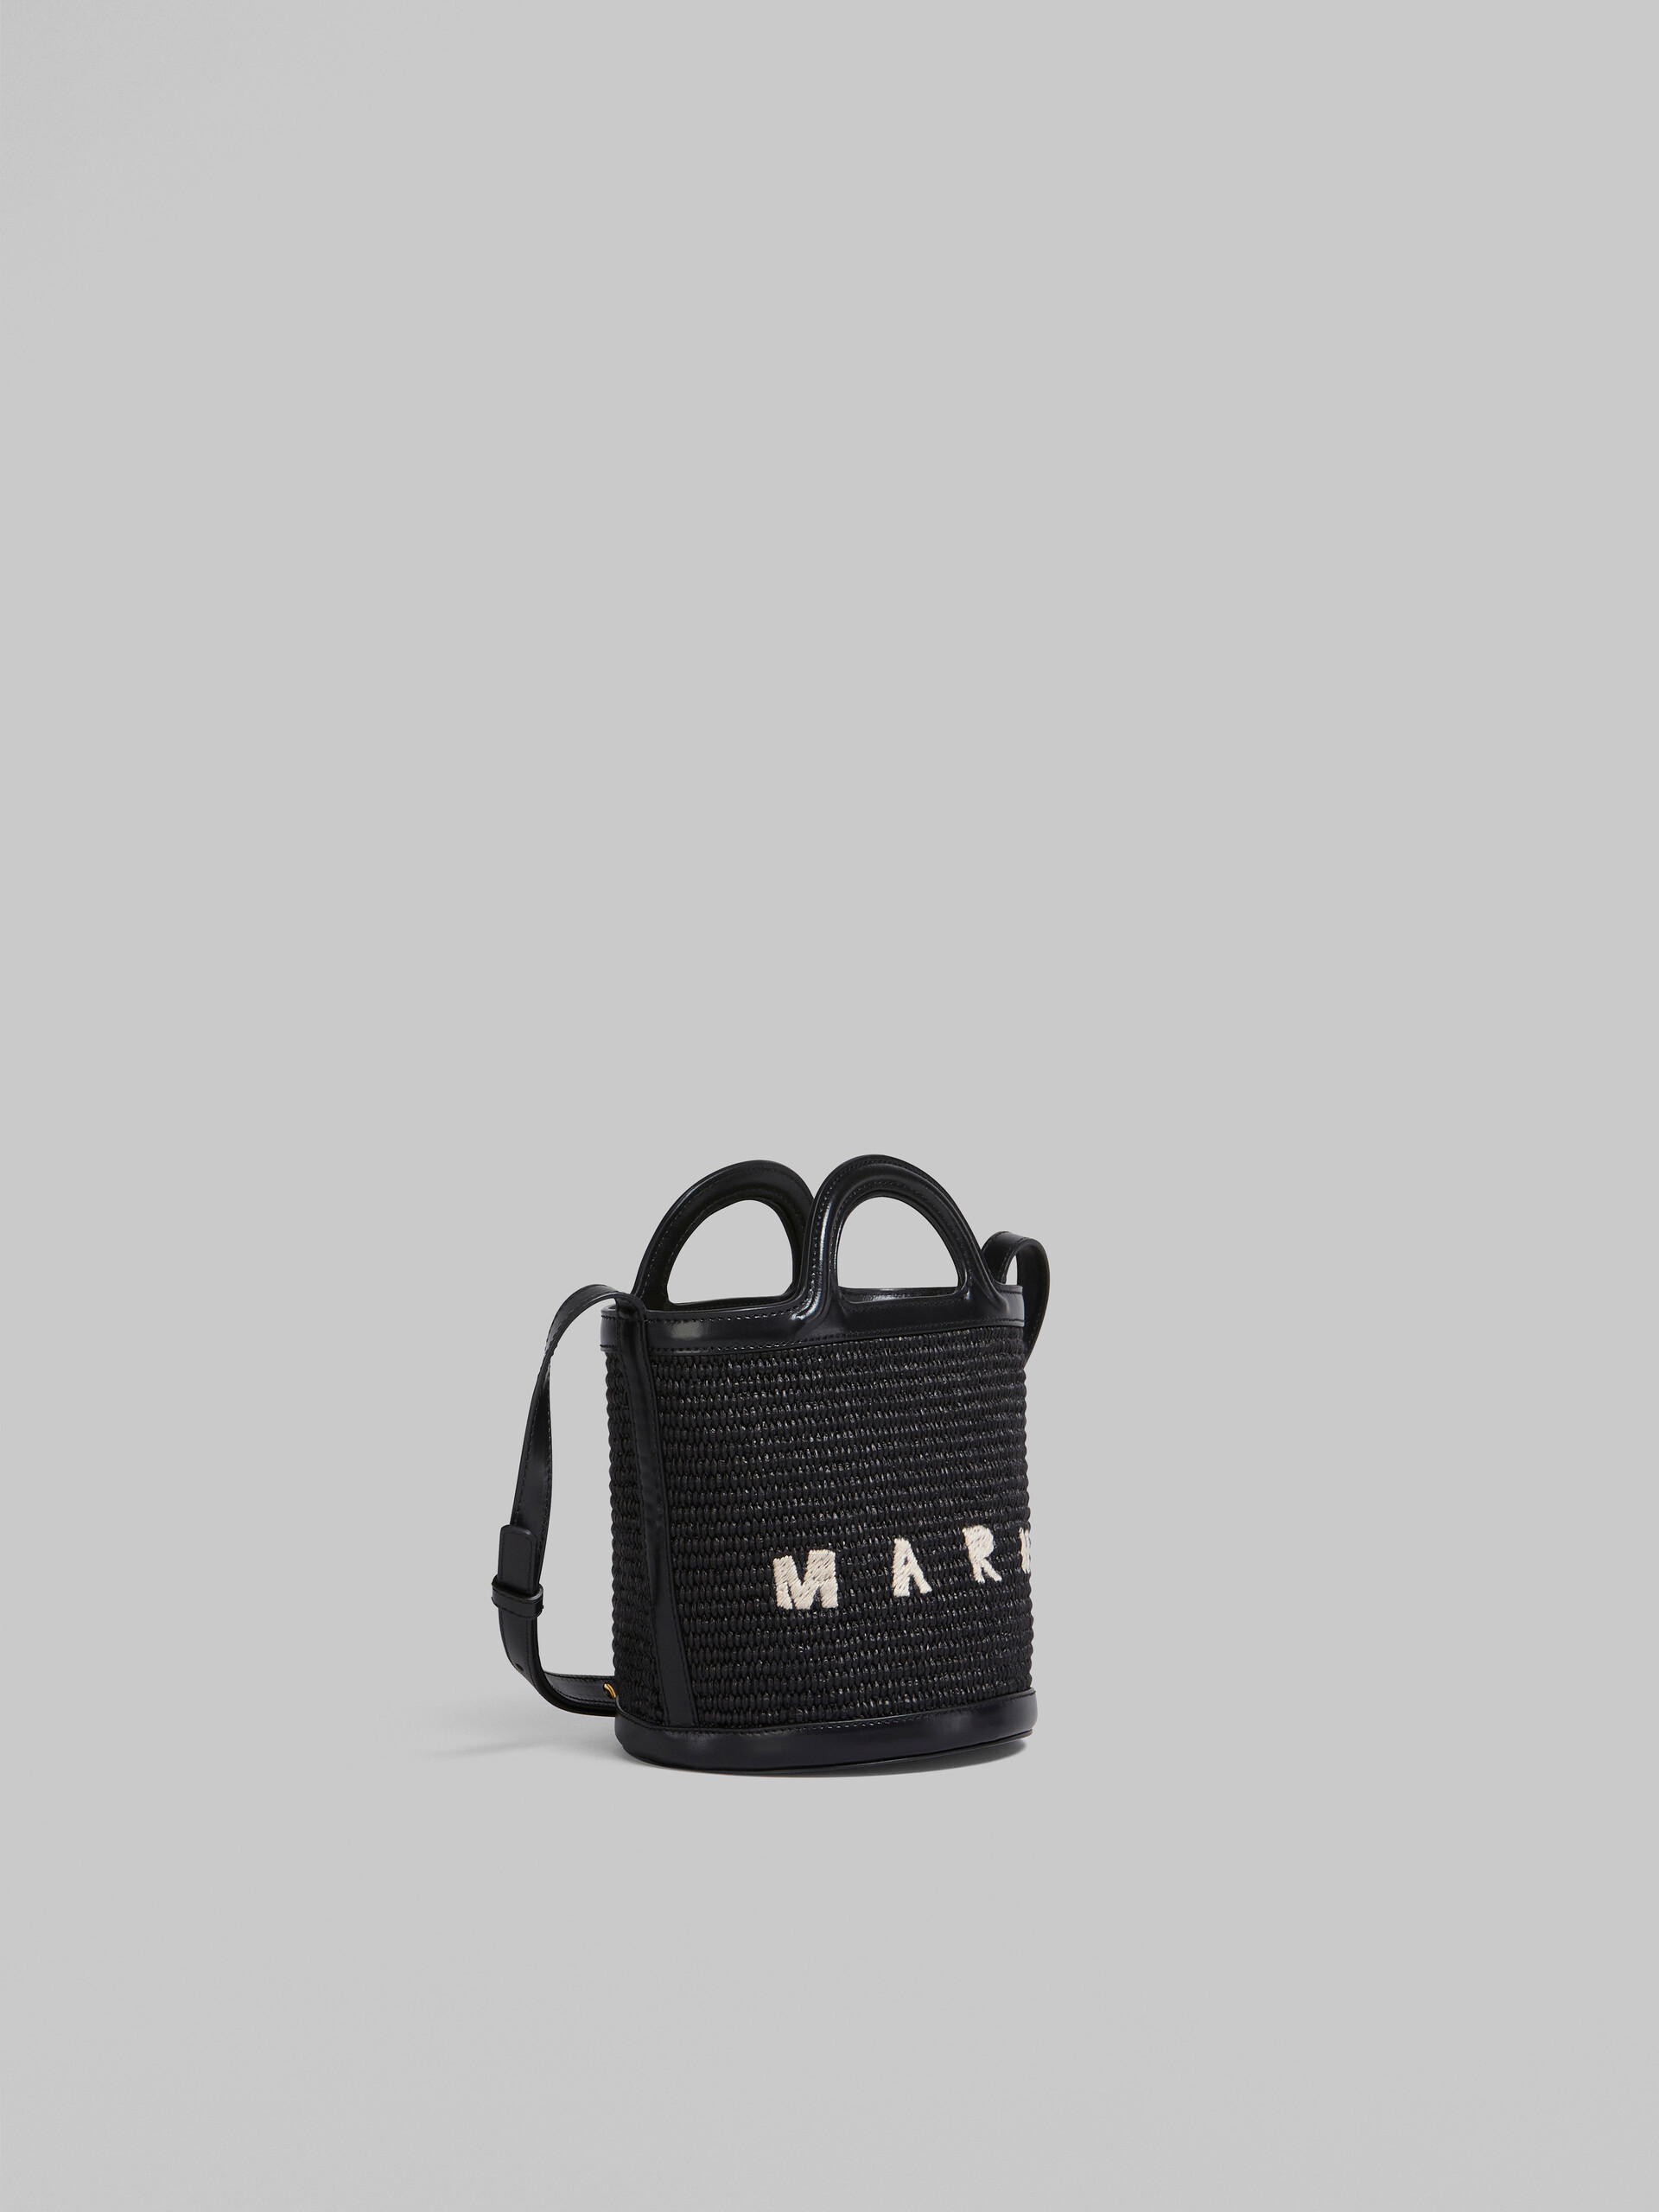 TROPICALIA mini bucket bag in black leather and raffia - Shoulder Bag - Image 6